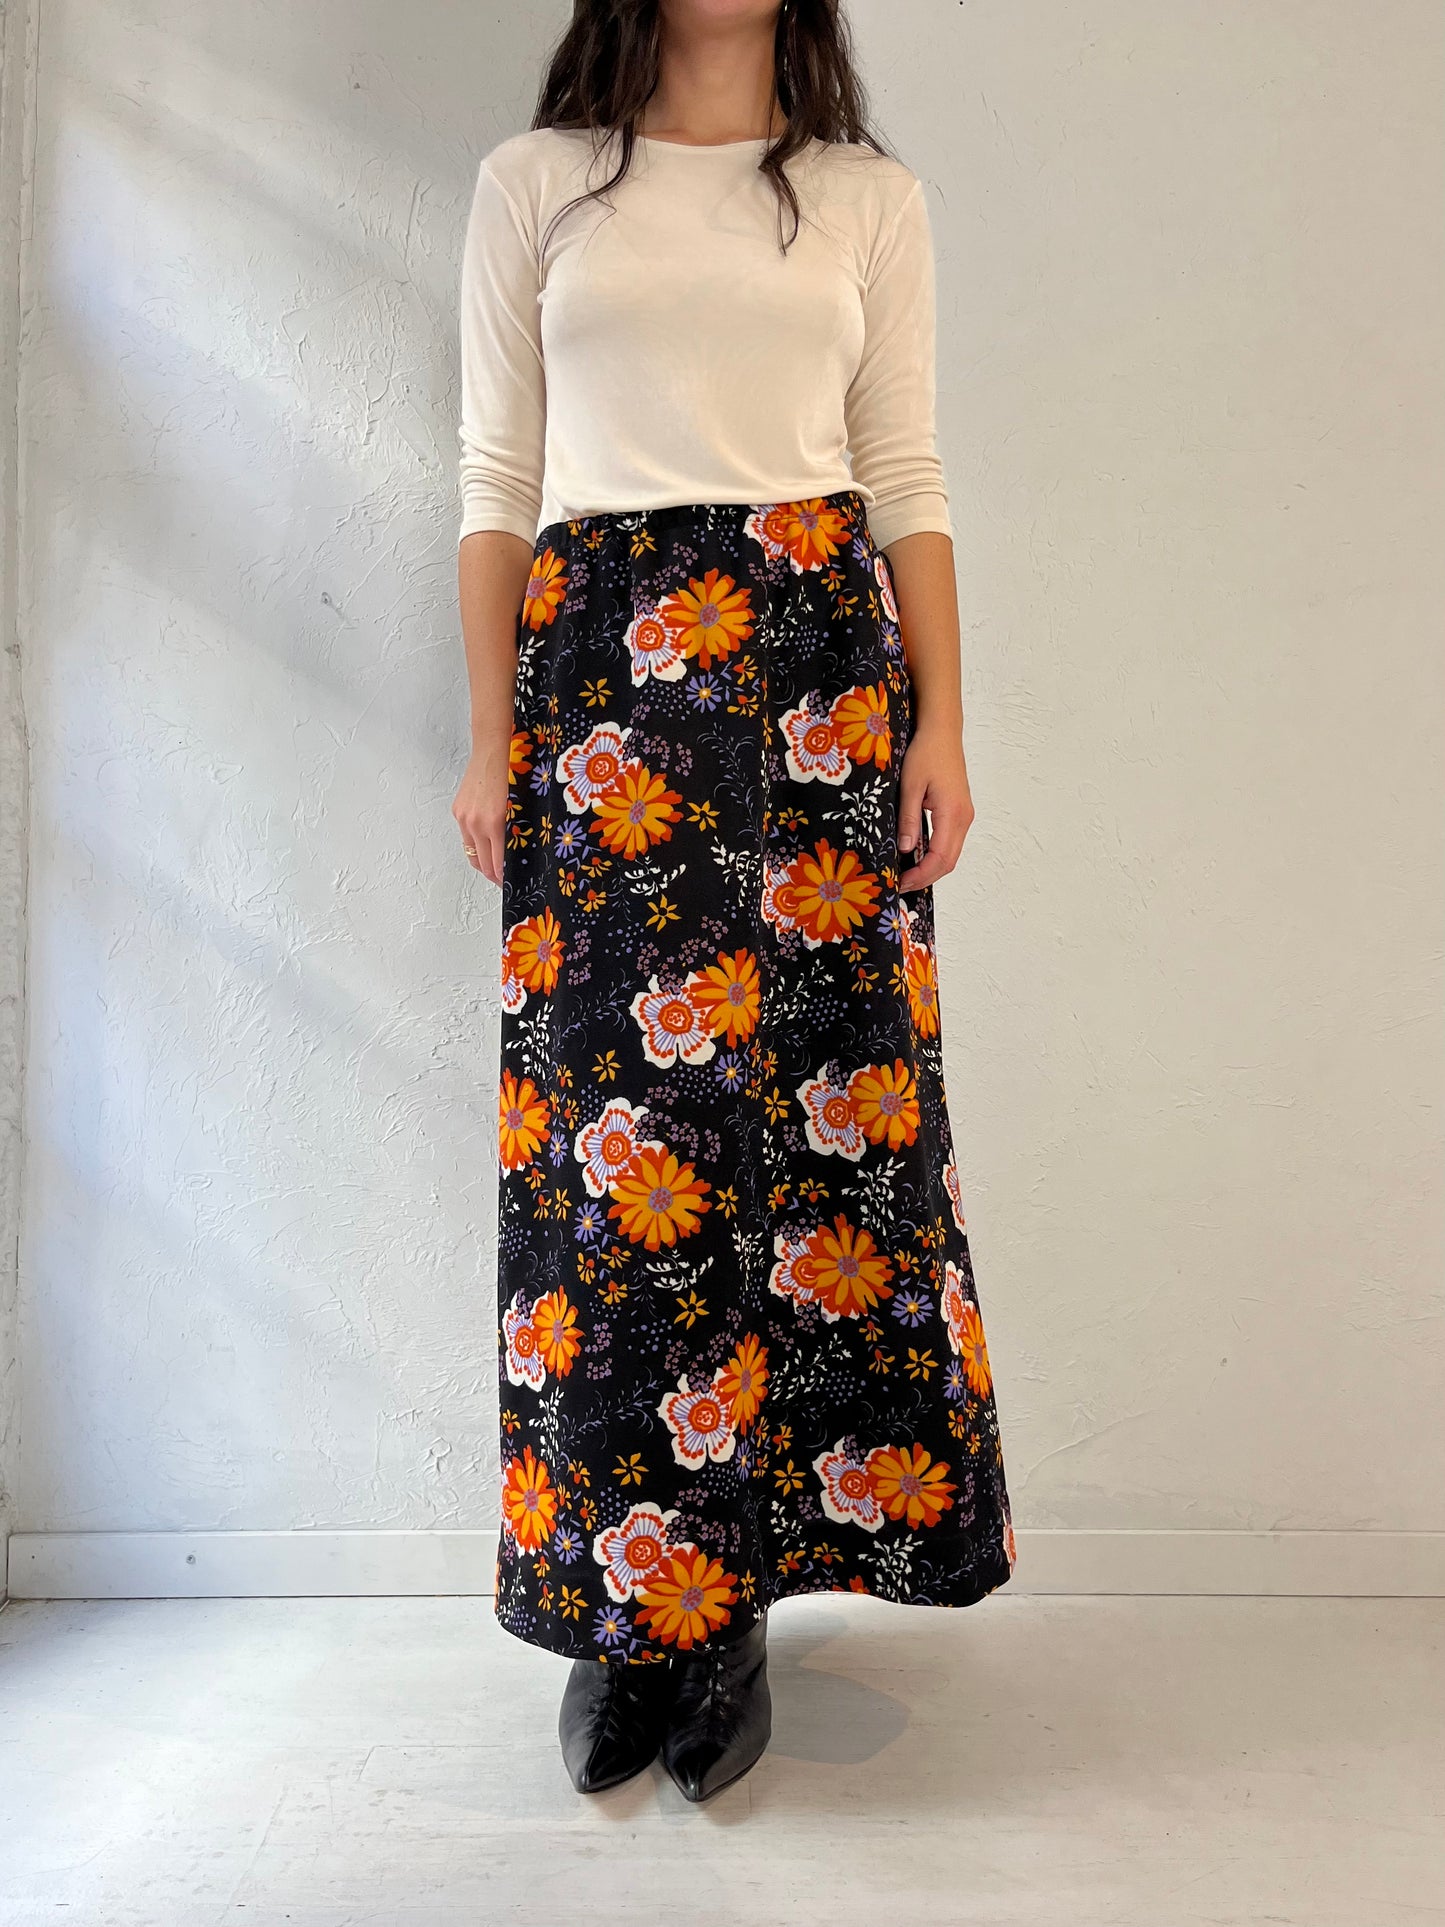 70s 'Earle Picard' Floral Print Maxi Skirt / Medium